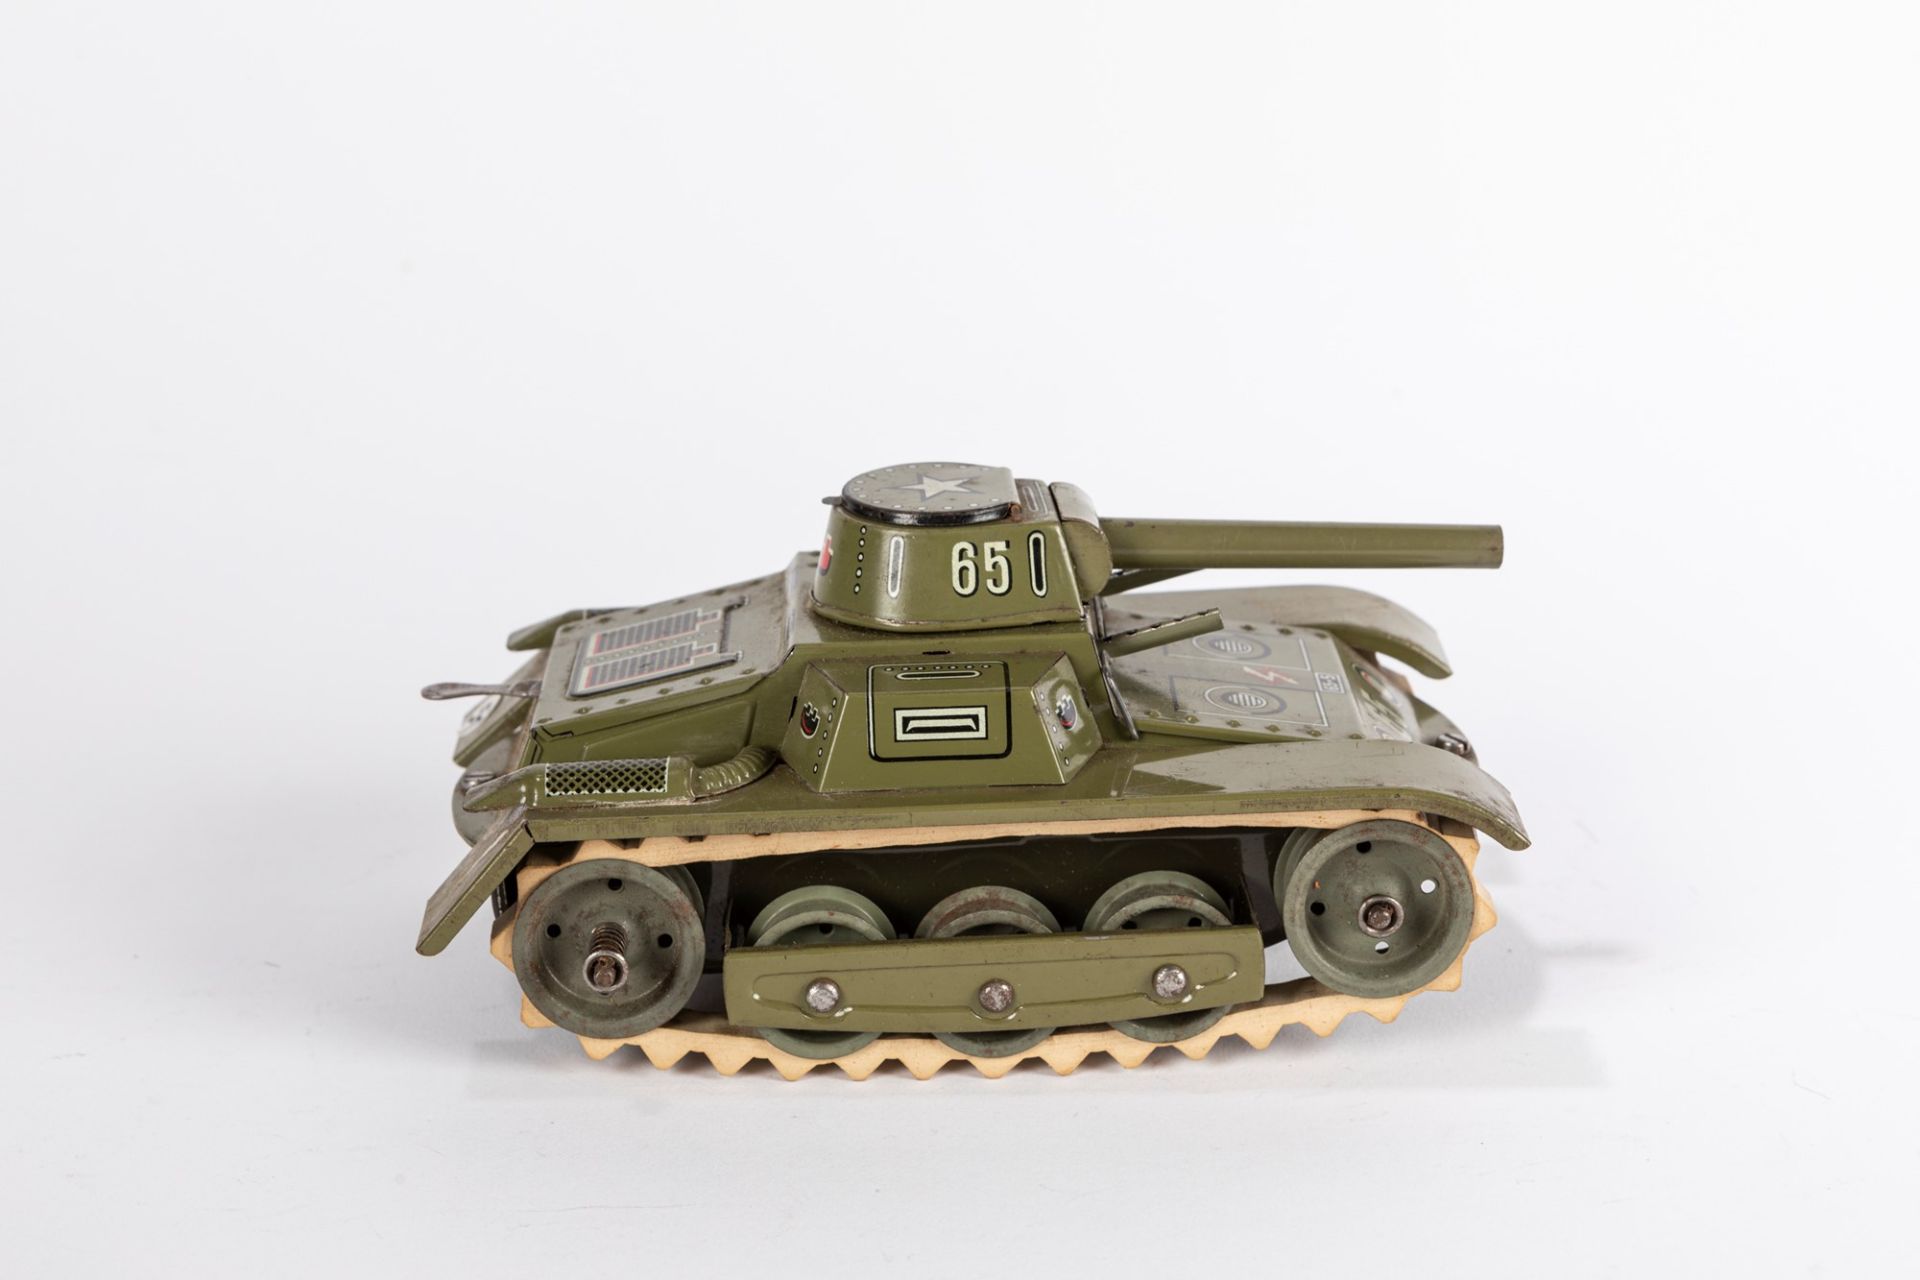 Gescha - M65 tank - Image 2 of 2